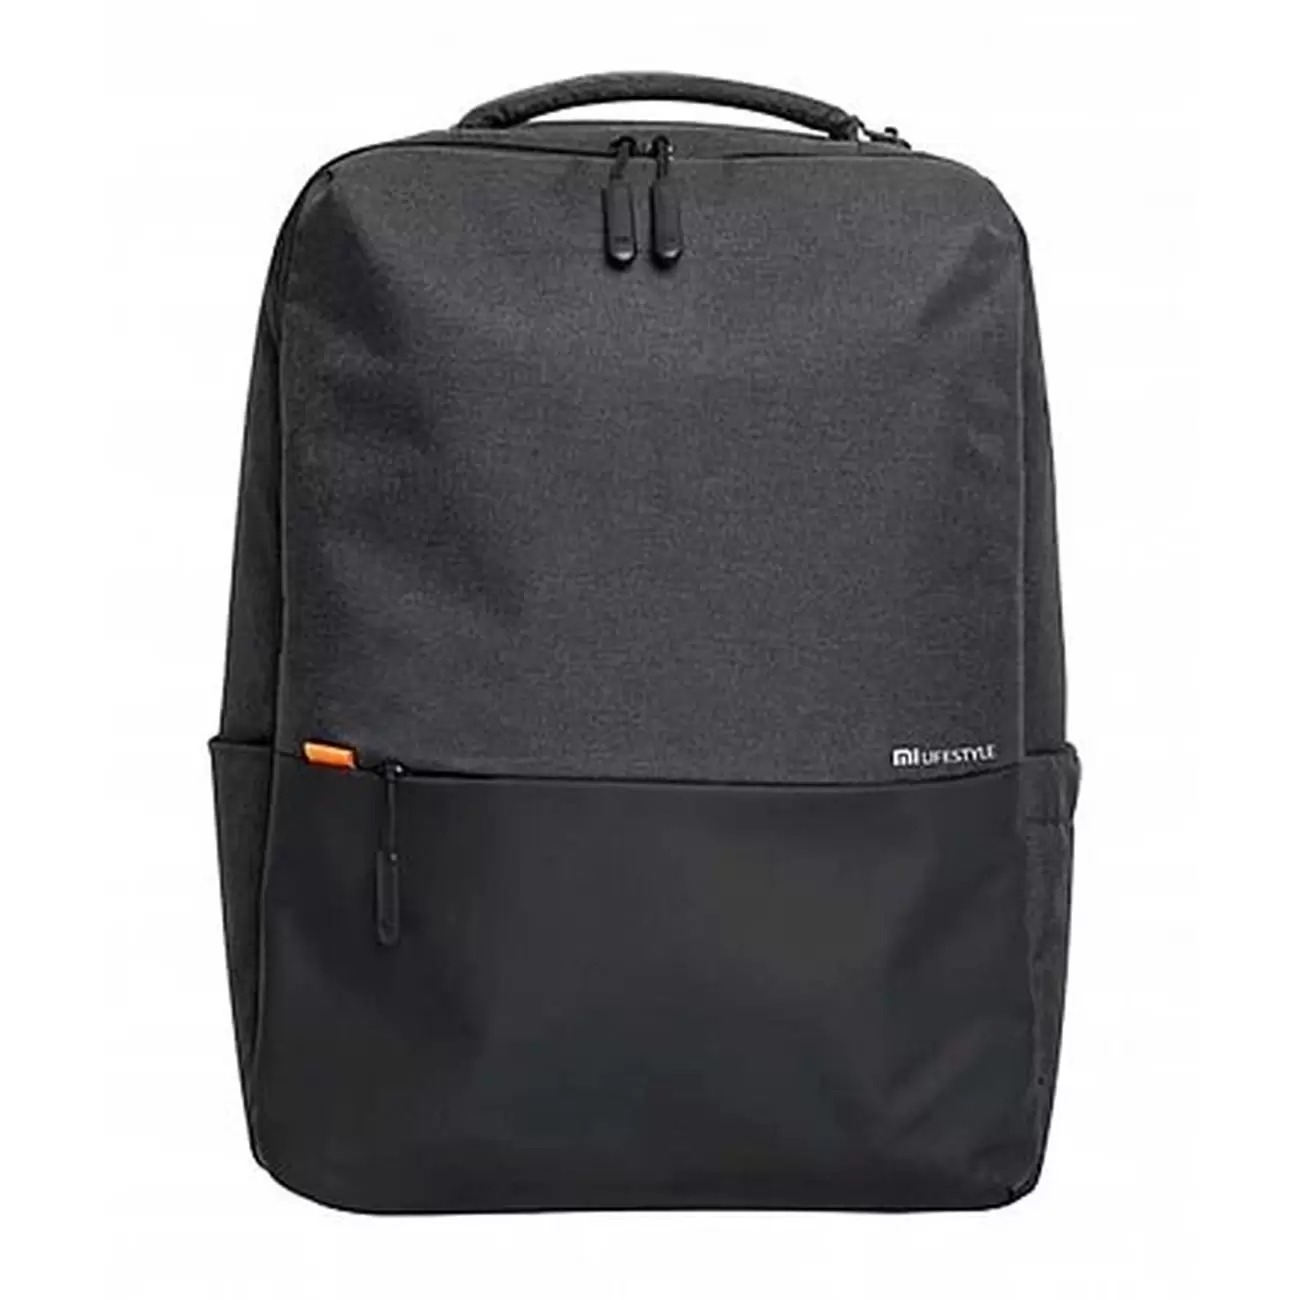 Рюкзак для ноутбука Xiaomi Commuter Backpack (Dark Gray) Bhr4903gl, цвет черный, размер 15 537502 Commuter Backpack (Dark Gray) Bhr4903gl - фото 1